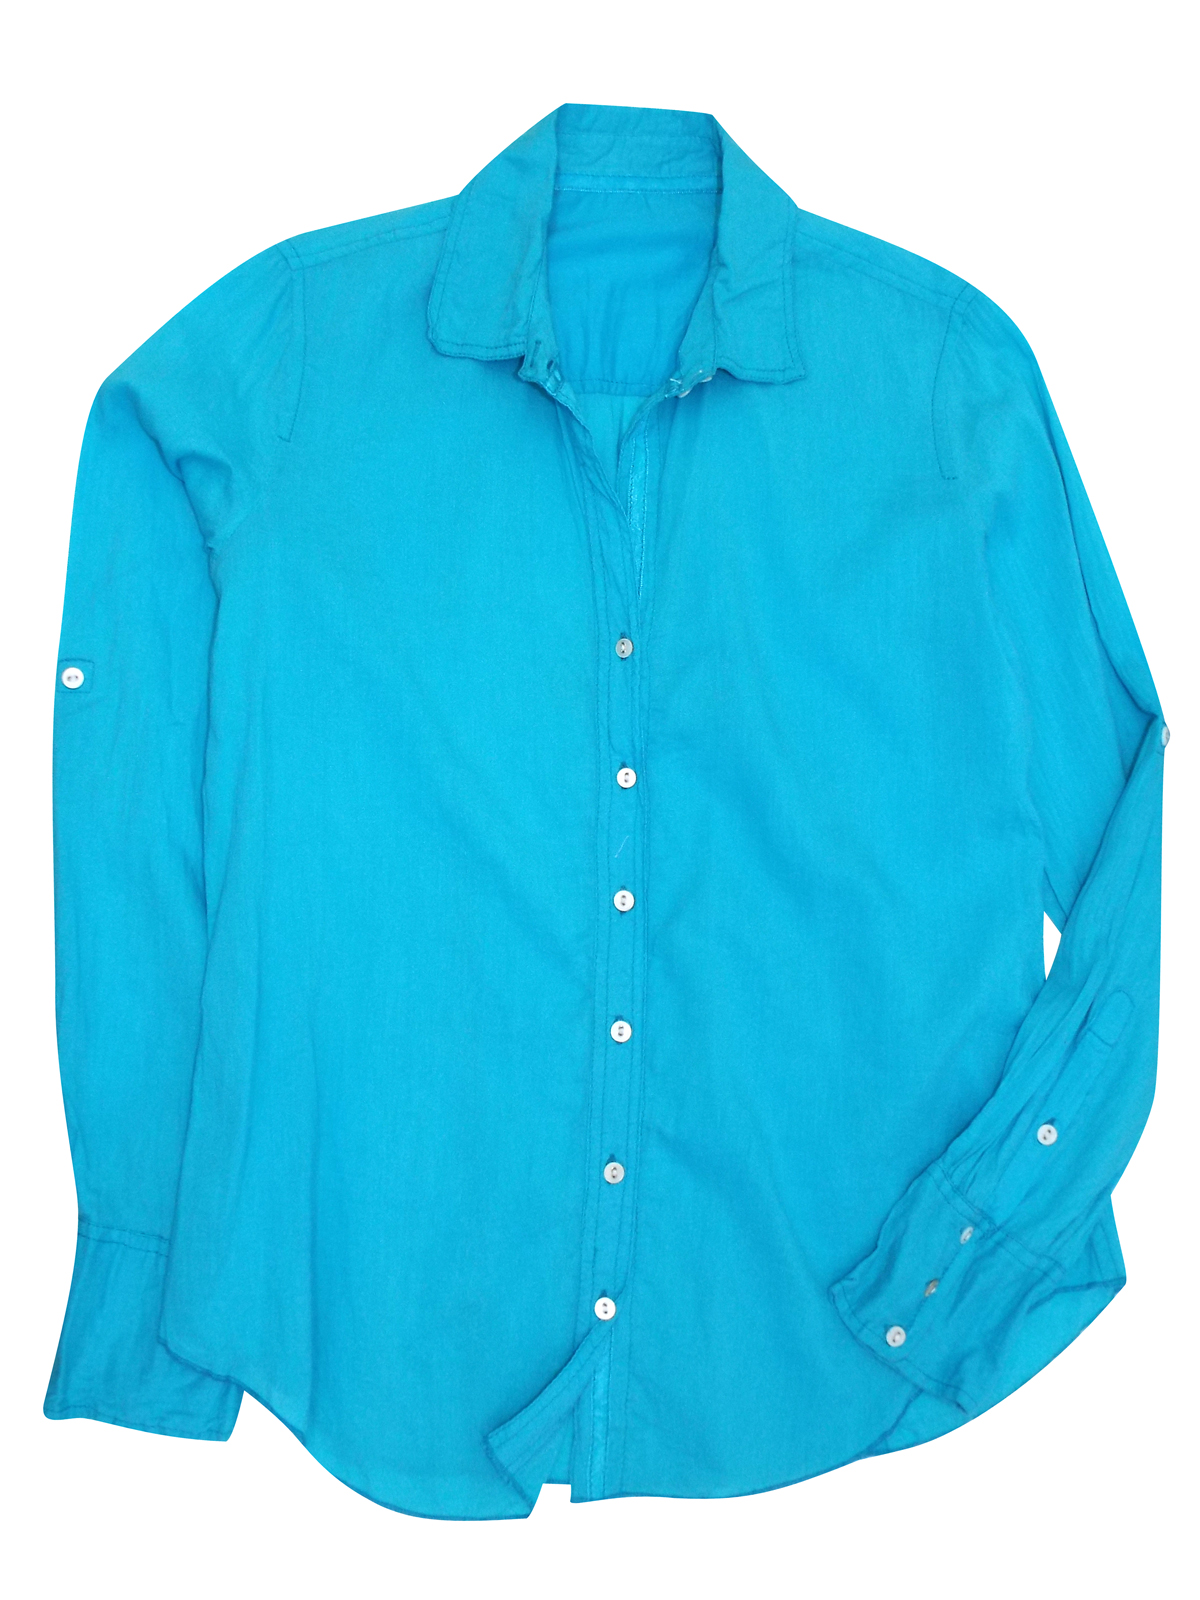 CINO - - CINO BLUE Citrus Turq Crinkle Cotton Shirt - Size 12 to 16 ...